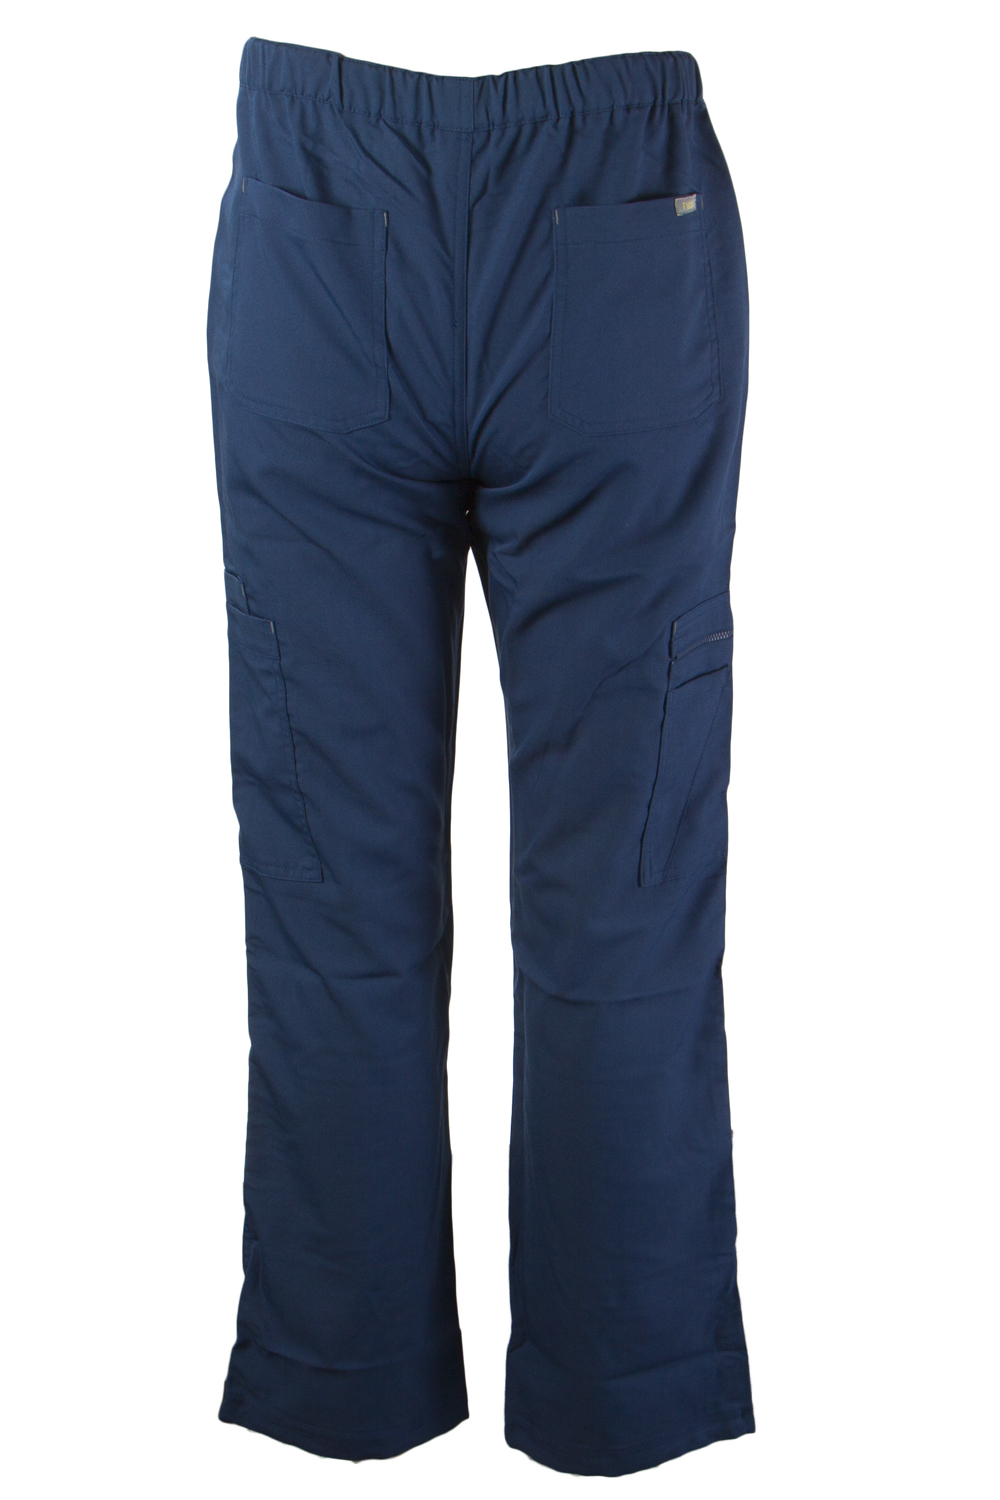 FIGS Men's Tela Cargo Scrub Pants PM5900 $46 NWT | eBay